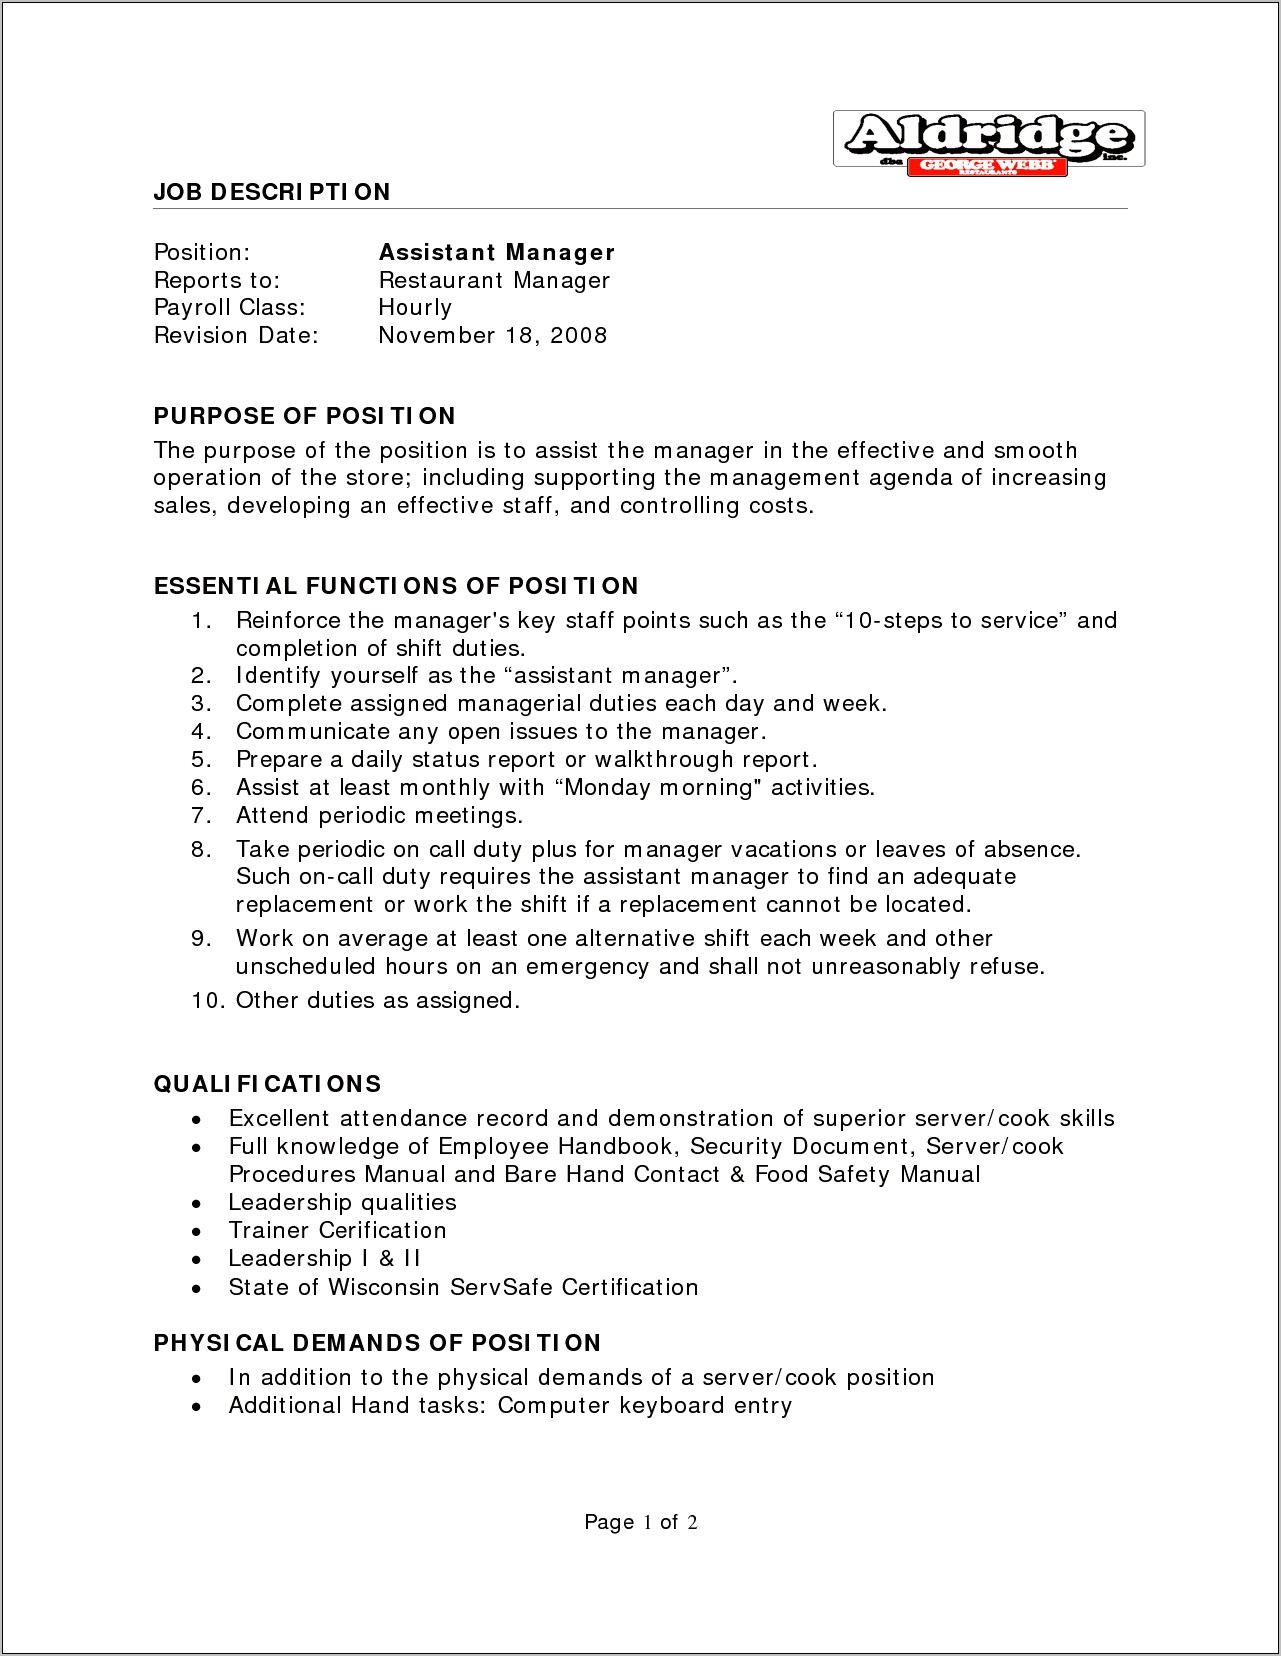 Job Description For Restaurant Manager Resume